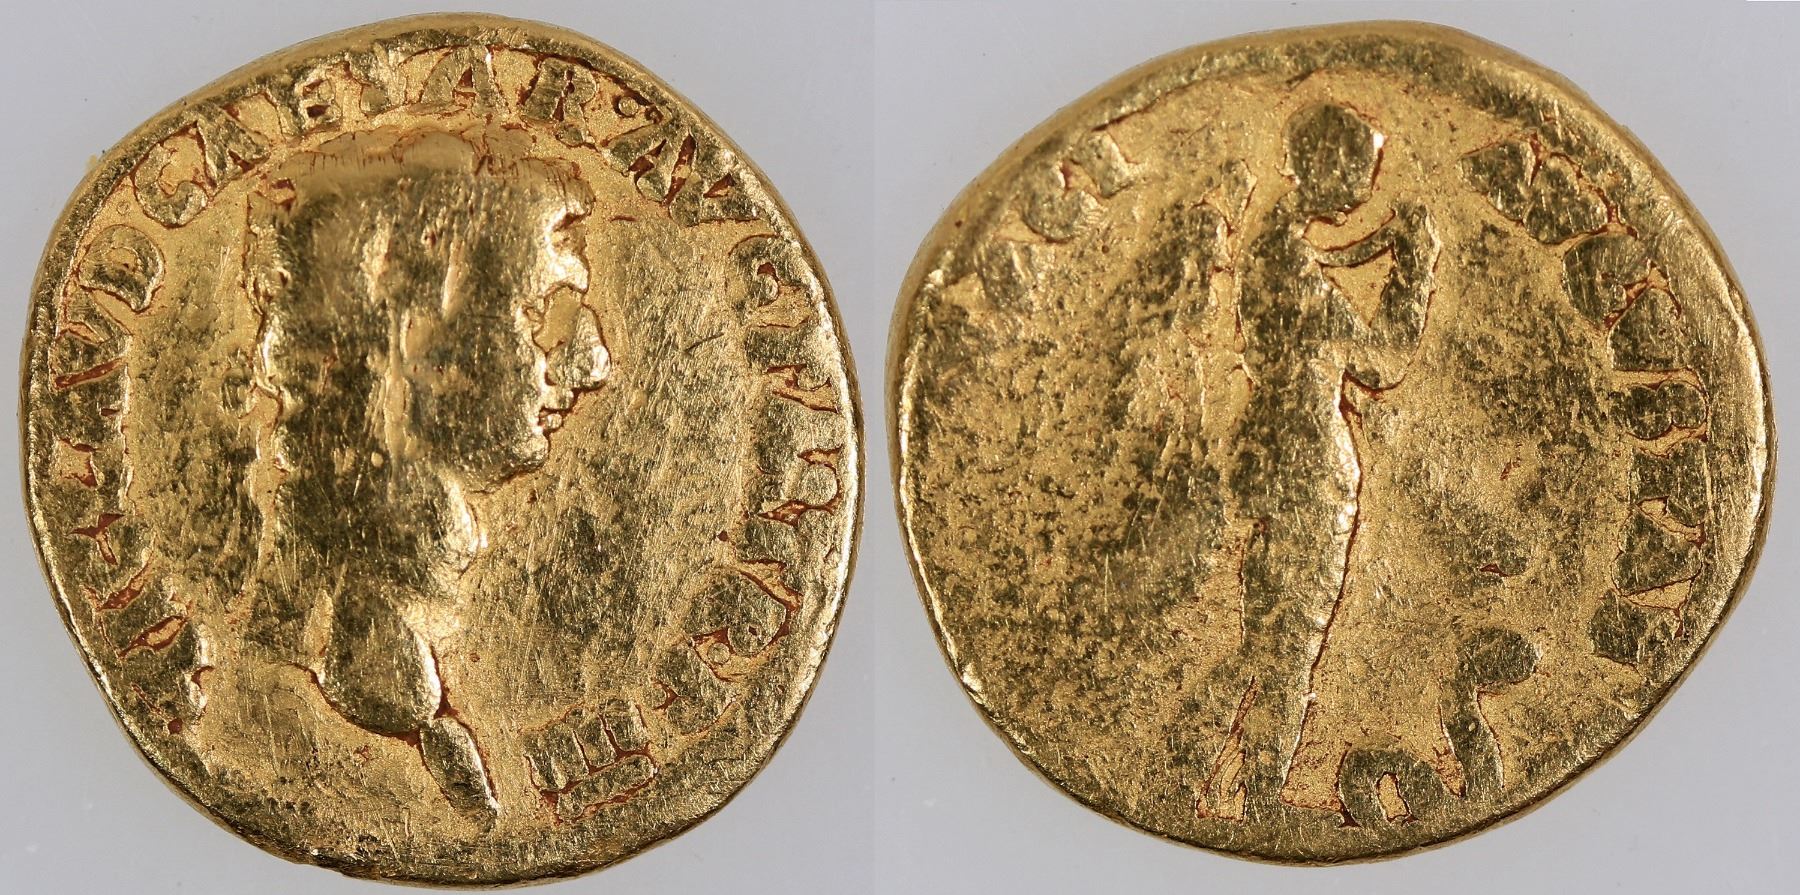 Aureus (an ancient Roman gold coin), depicting Claudius (A.D. 41-54), est. $3,000-$3,500.